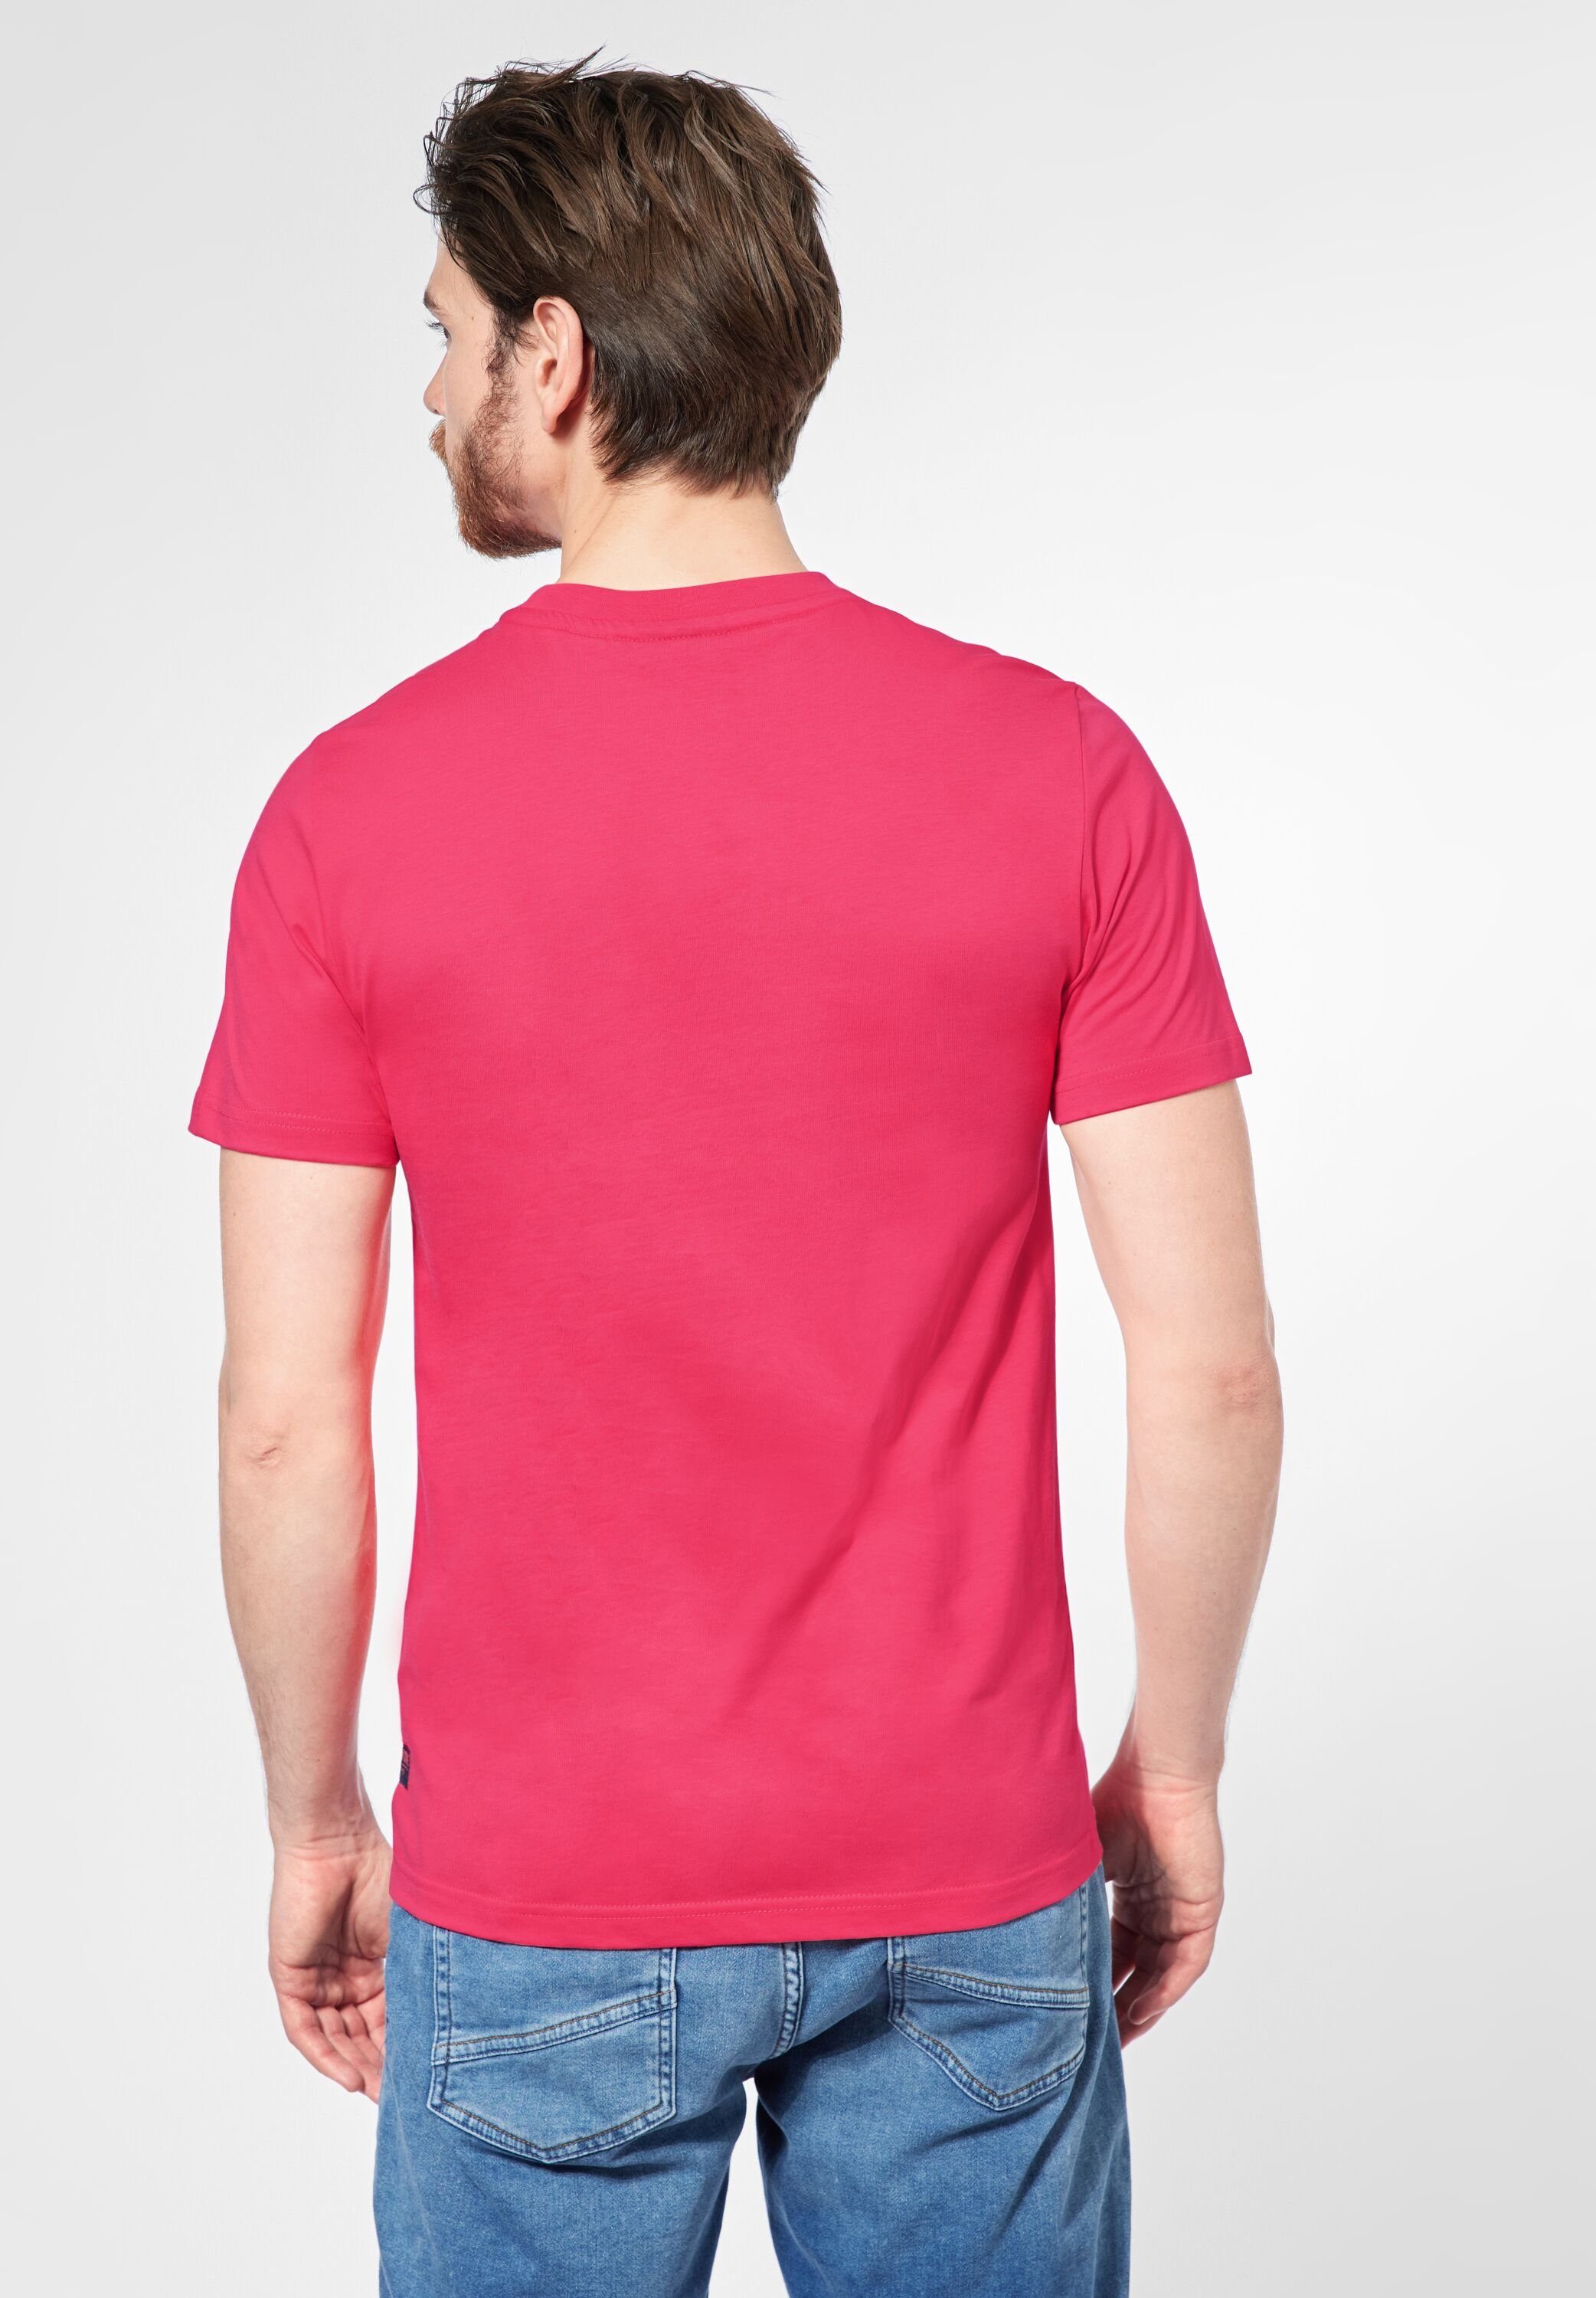 mit T-Shirt red MEN Wording-Print STREET hibiscus ONE